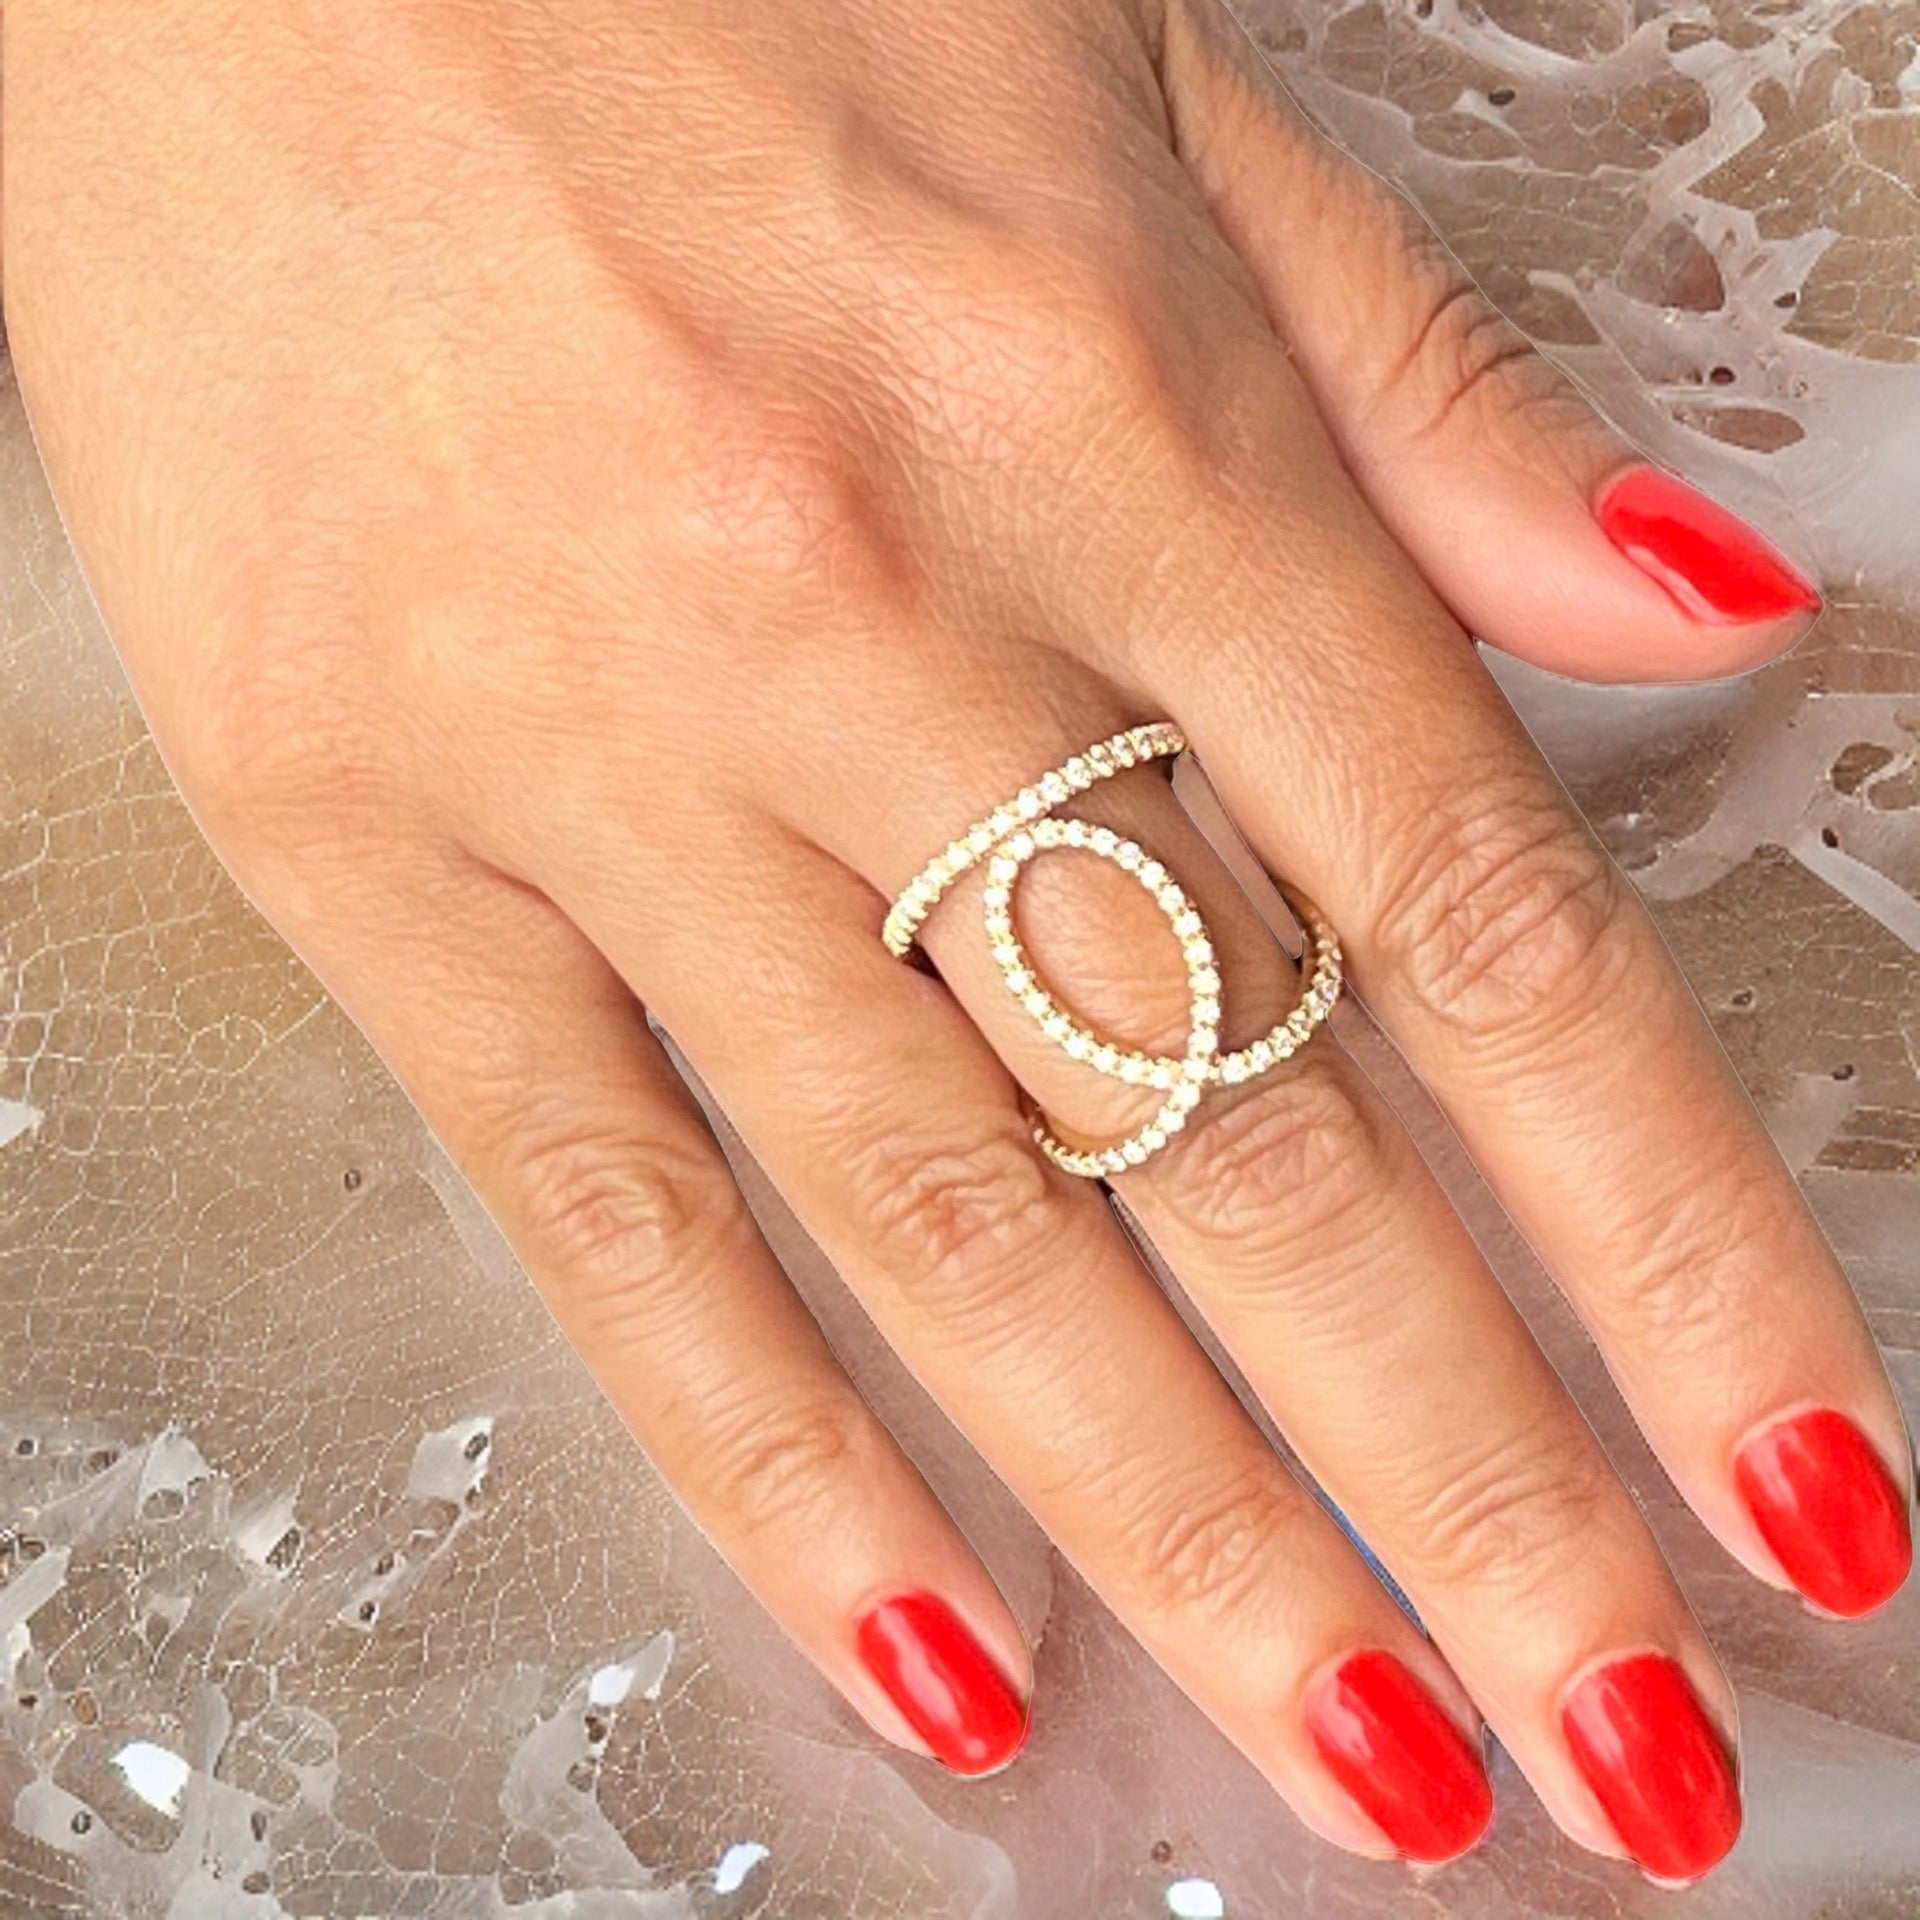 Diamond Ring 14k Gold 0.85 TCW Size 9.25 Certified $5,950 215643 - Certified Fine Jewelry